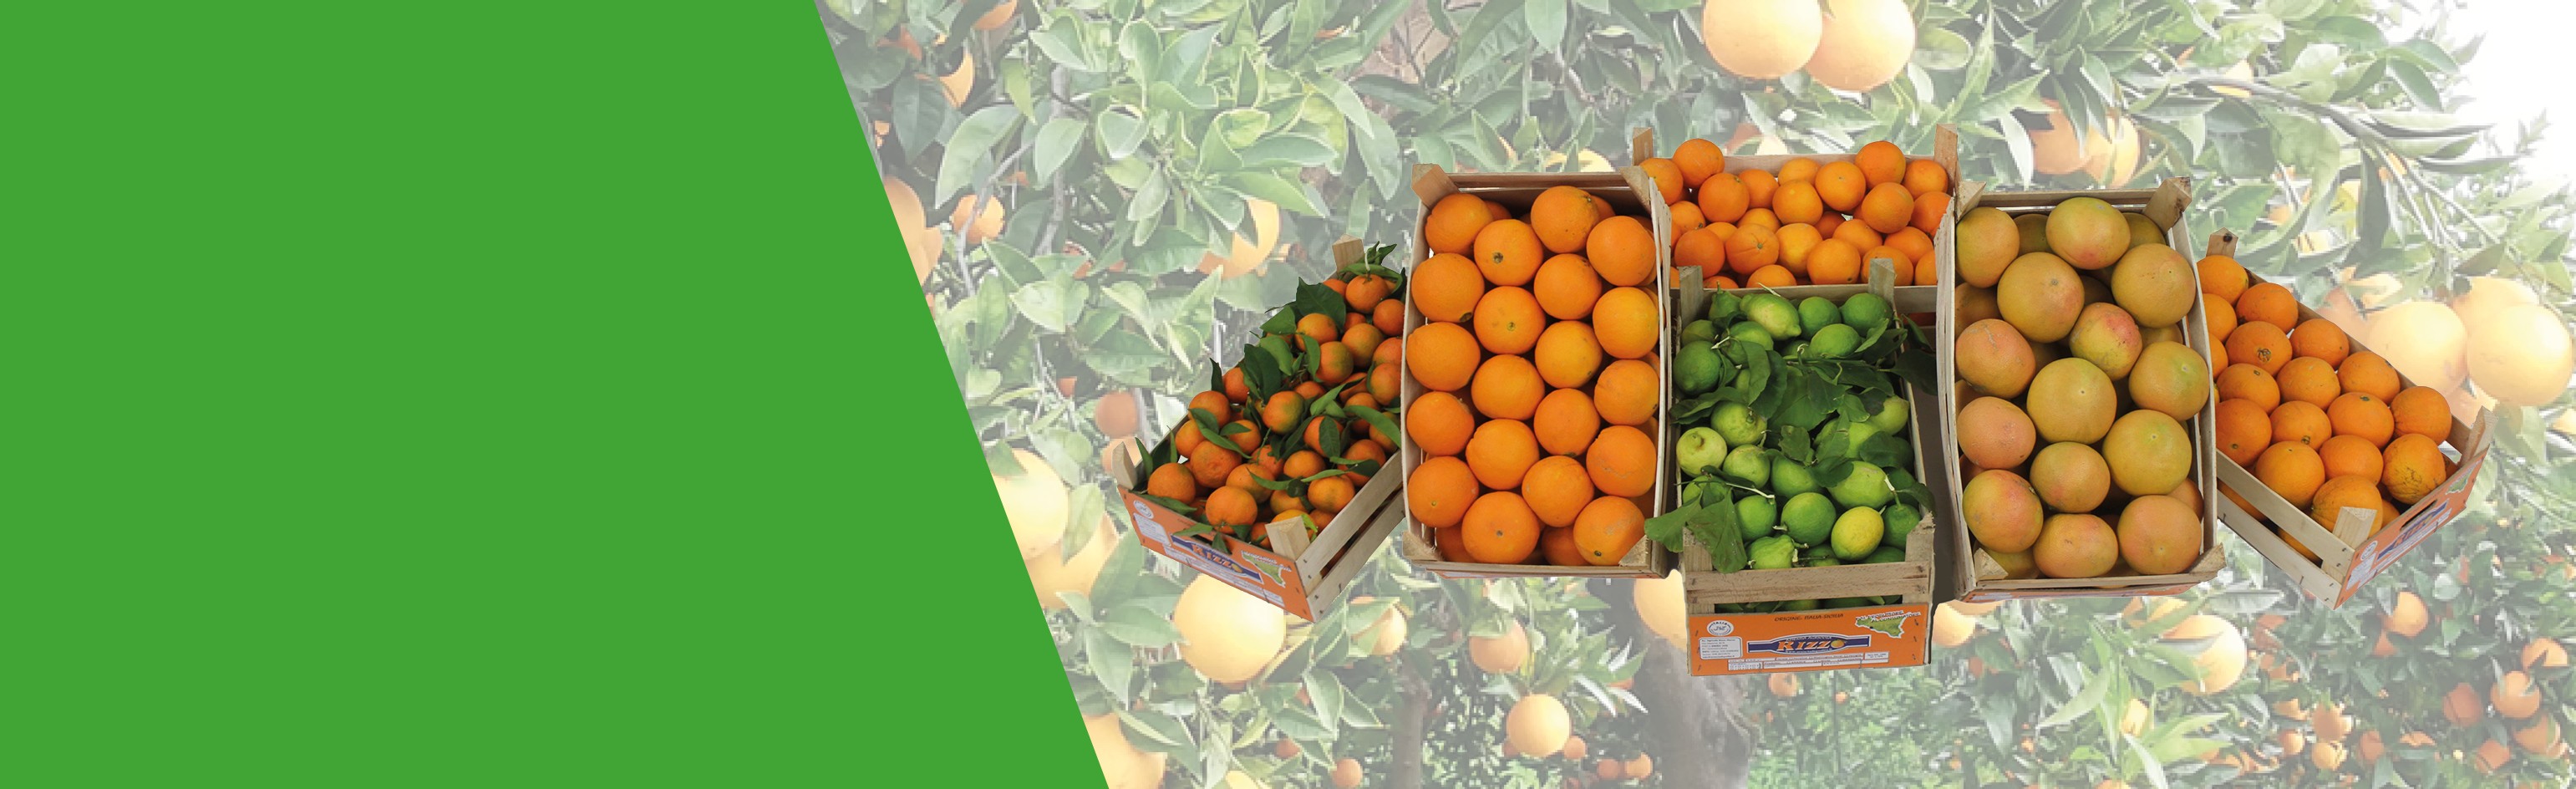 Agrumi Siciliani: Mandarini e Clementine, Limoni e Pompelmi Rosa